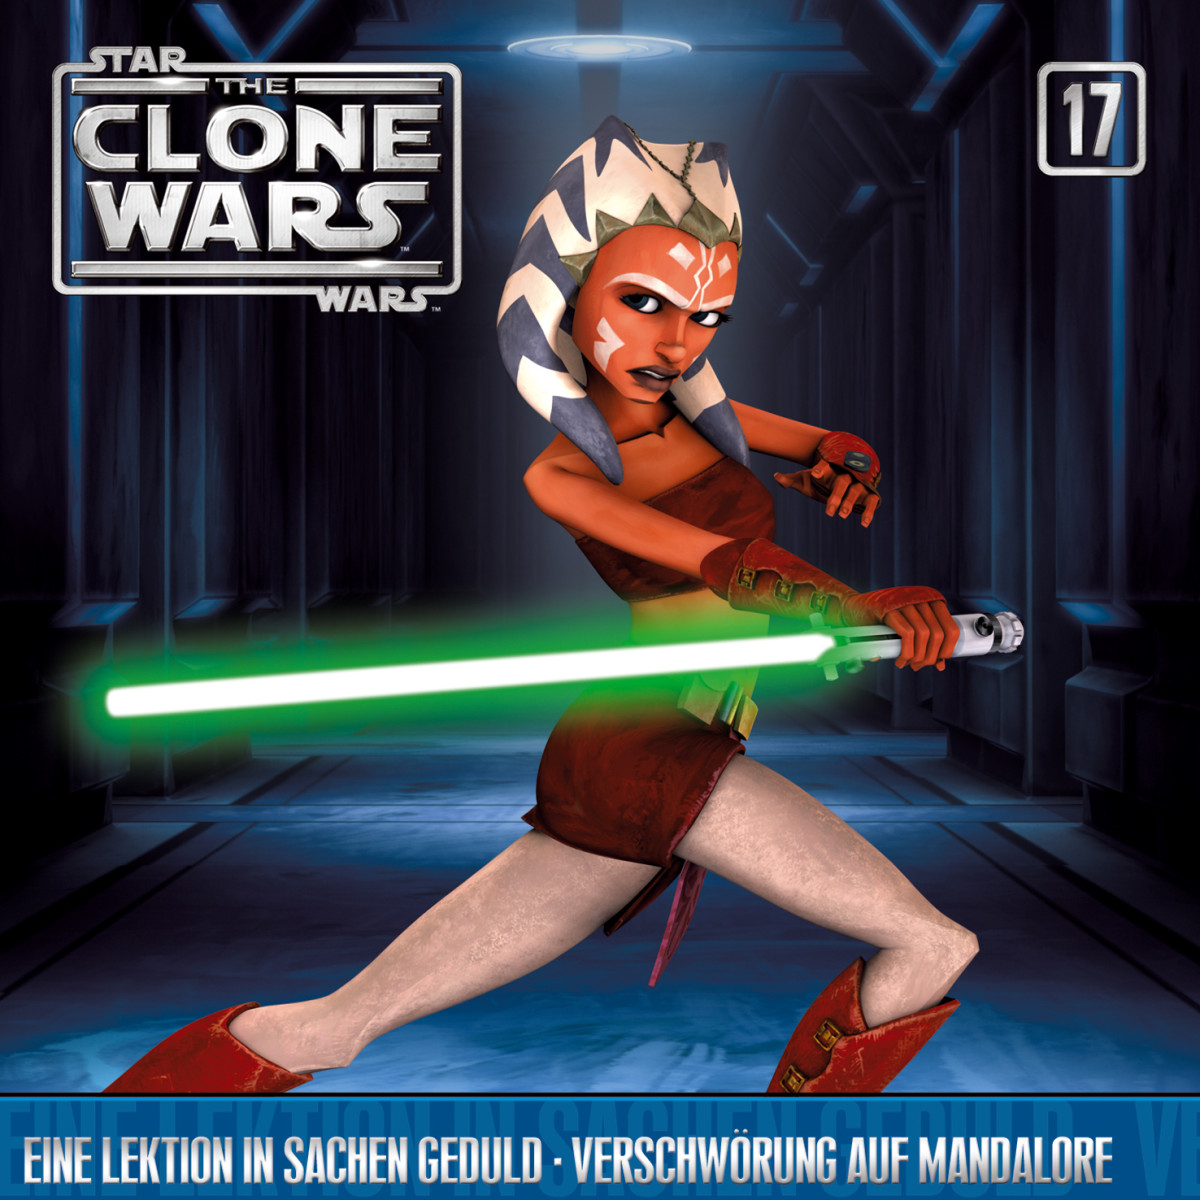 Star Wars: The Clone Wars - The Final Season (Episodes 5-8